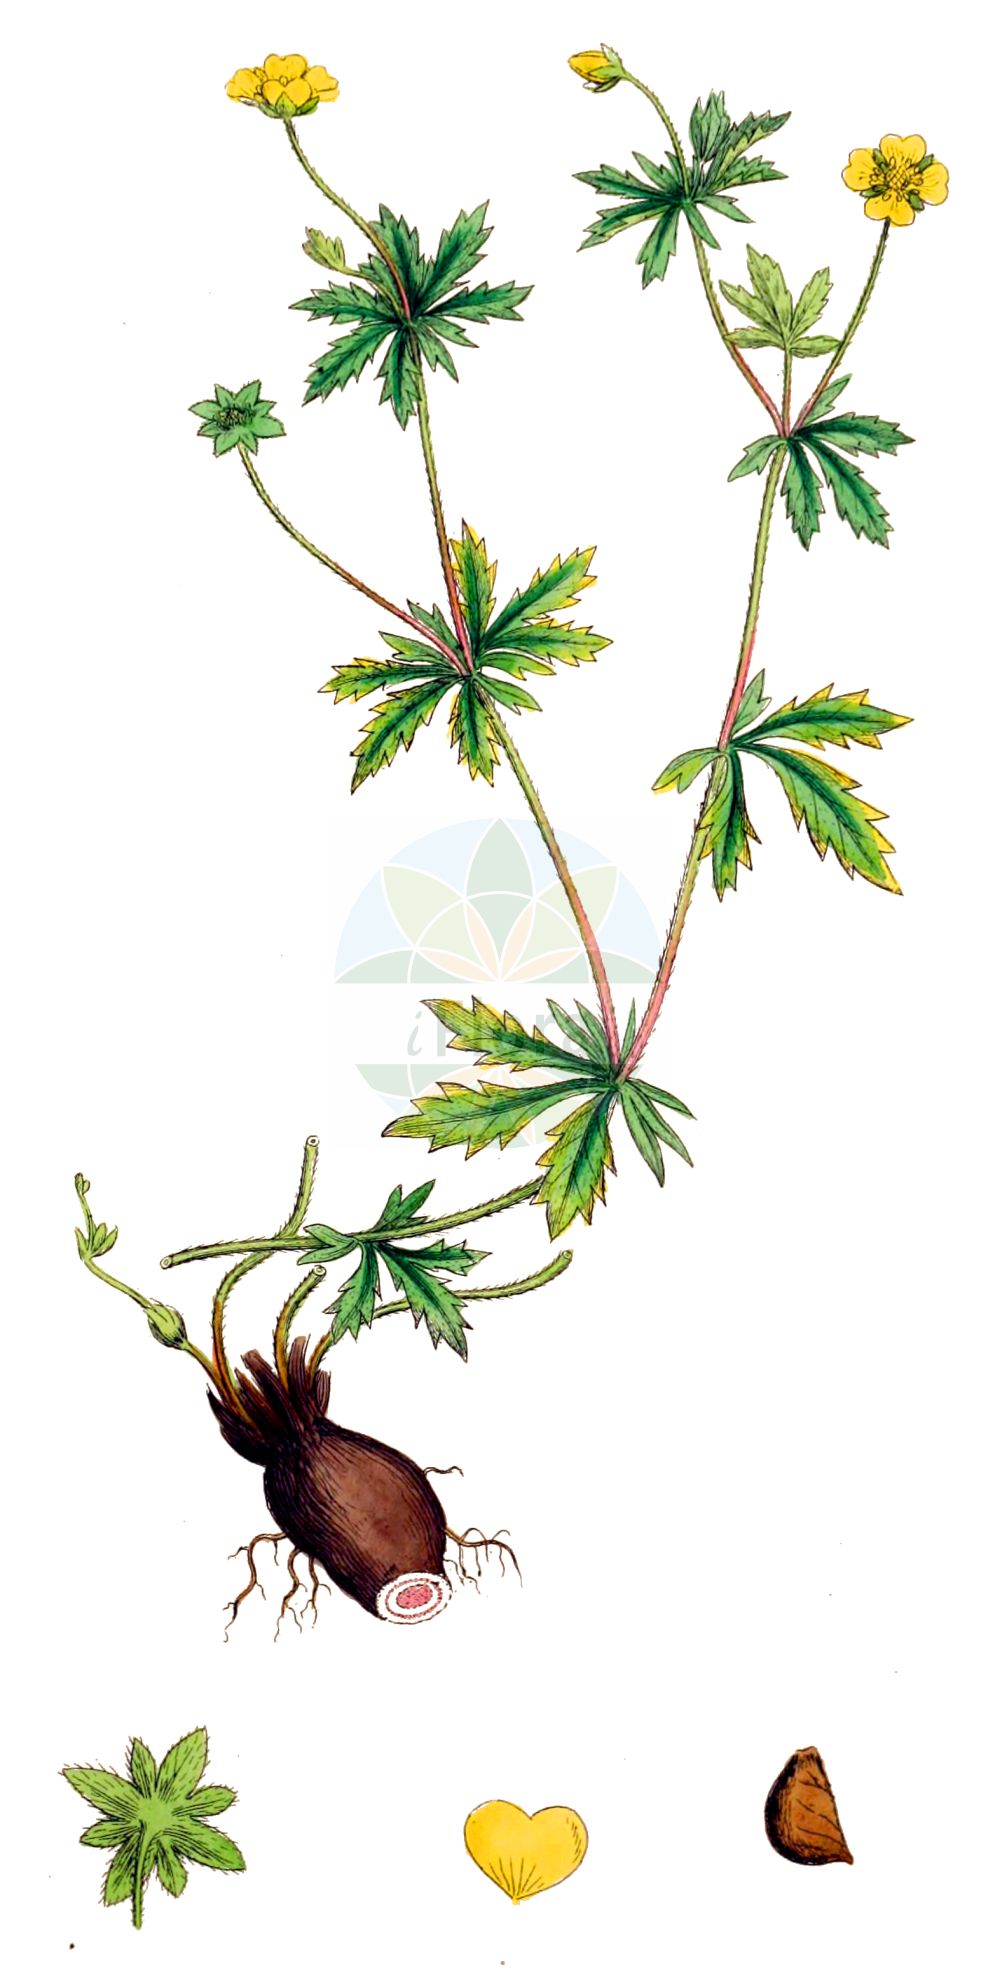 Historische Abbildung von Potentilla erecta (Blutwurz - Tormentil). Das Bild zeigt Blatt, Bluete, Frucht und Same. ---- Historical Drawing of Potentilla erecta (Blutwurz - Tormentil). The image is showing leaf, flower, fruit and seed.(Potentilla erecta,Blutwurz,Tormentil,Fragaria tormentilla,Chaenomeles japonica,Geum macrophyllum,Acaena novae-zelandiae,Spiraea media,Cotoneaster pannosus,Cotoneaster sternianus,Cotoneaster salicifolius,Potentilla dacica,Potentilla divergens,Potentilla erecta,Potentilla favratii,Potentilla laeta,Potentilla monacensis,Potentilla officinalis,Potentilla sciaphila,Potentilla strictissima,Potentilla sylvestris,Potentilla tetrapetala,Potentilla tormentilla,Tormentilla adstringens,Tormentilla alpina,Tormentilla dissecta,Tormentilla divergens,Tormentilla erecta,Tormentilla ericetorum,Tormentilla gracilis,Tormentilla montana,Tormentilla nodosa,Tormentilla officinalis,Tormentilla officinarum,Tormentilla orophila,Tormentilla parviflora,Tormentilla recta,Tormentilla sessilifolia,Tormentilla sylvestris,Tormentilla vulgaris,Blutwurz,Tormentille,Tormentil,Bloodroot,Erect Cinquefoil,Bloodwort,Common Tormentil,Potentilla,Fingerkraut,Cinquefoil,Rosaceae,Rosengewächse,Rose family,Blatt,Bluete,Frucht,Same,leaf,flower,fruit,seed,Sowerby (1790-1813))